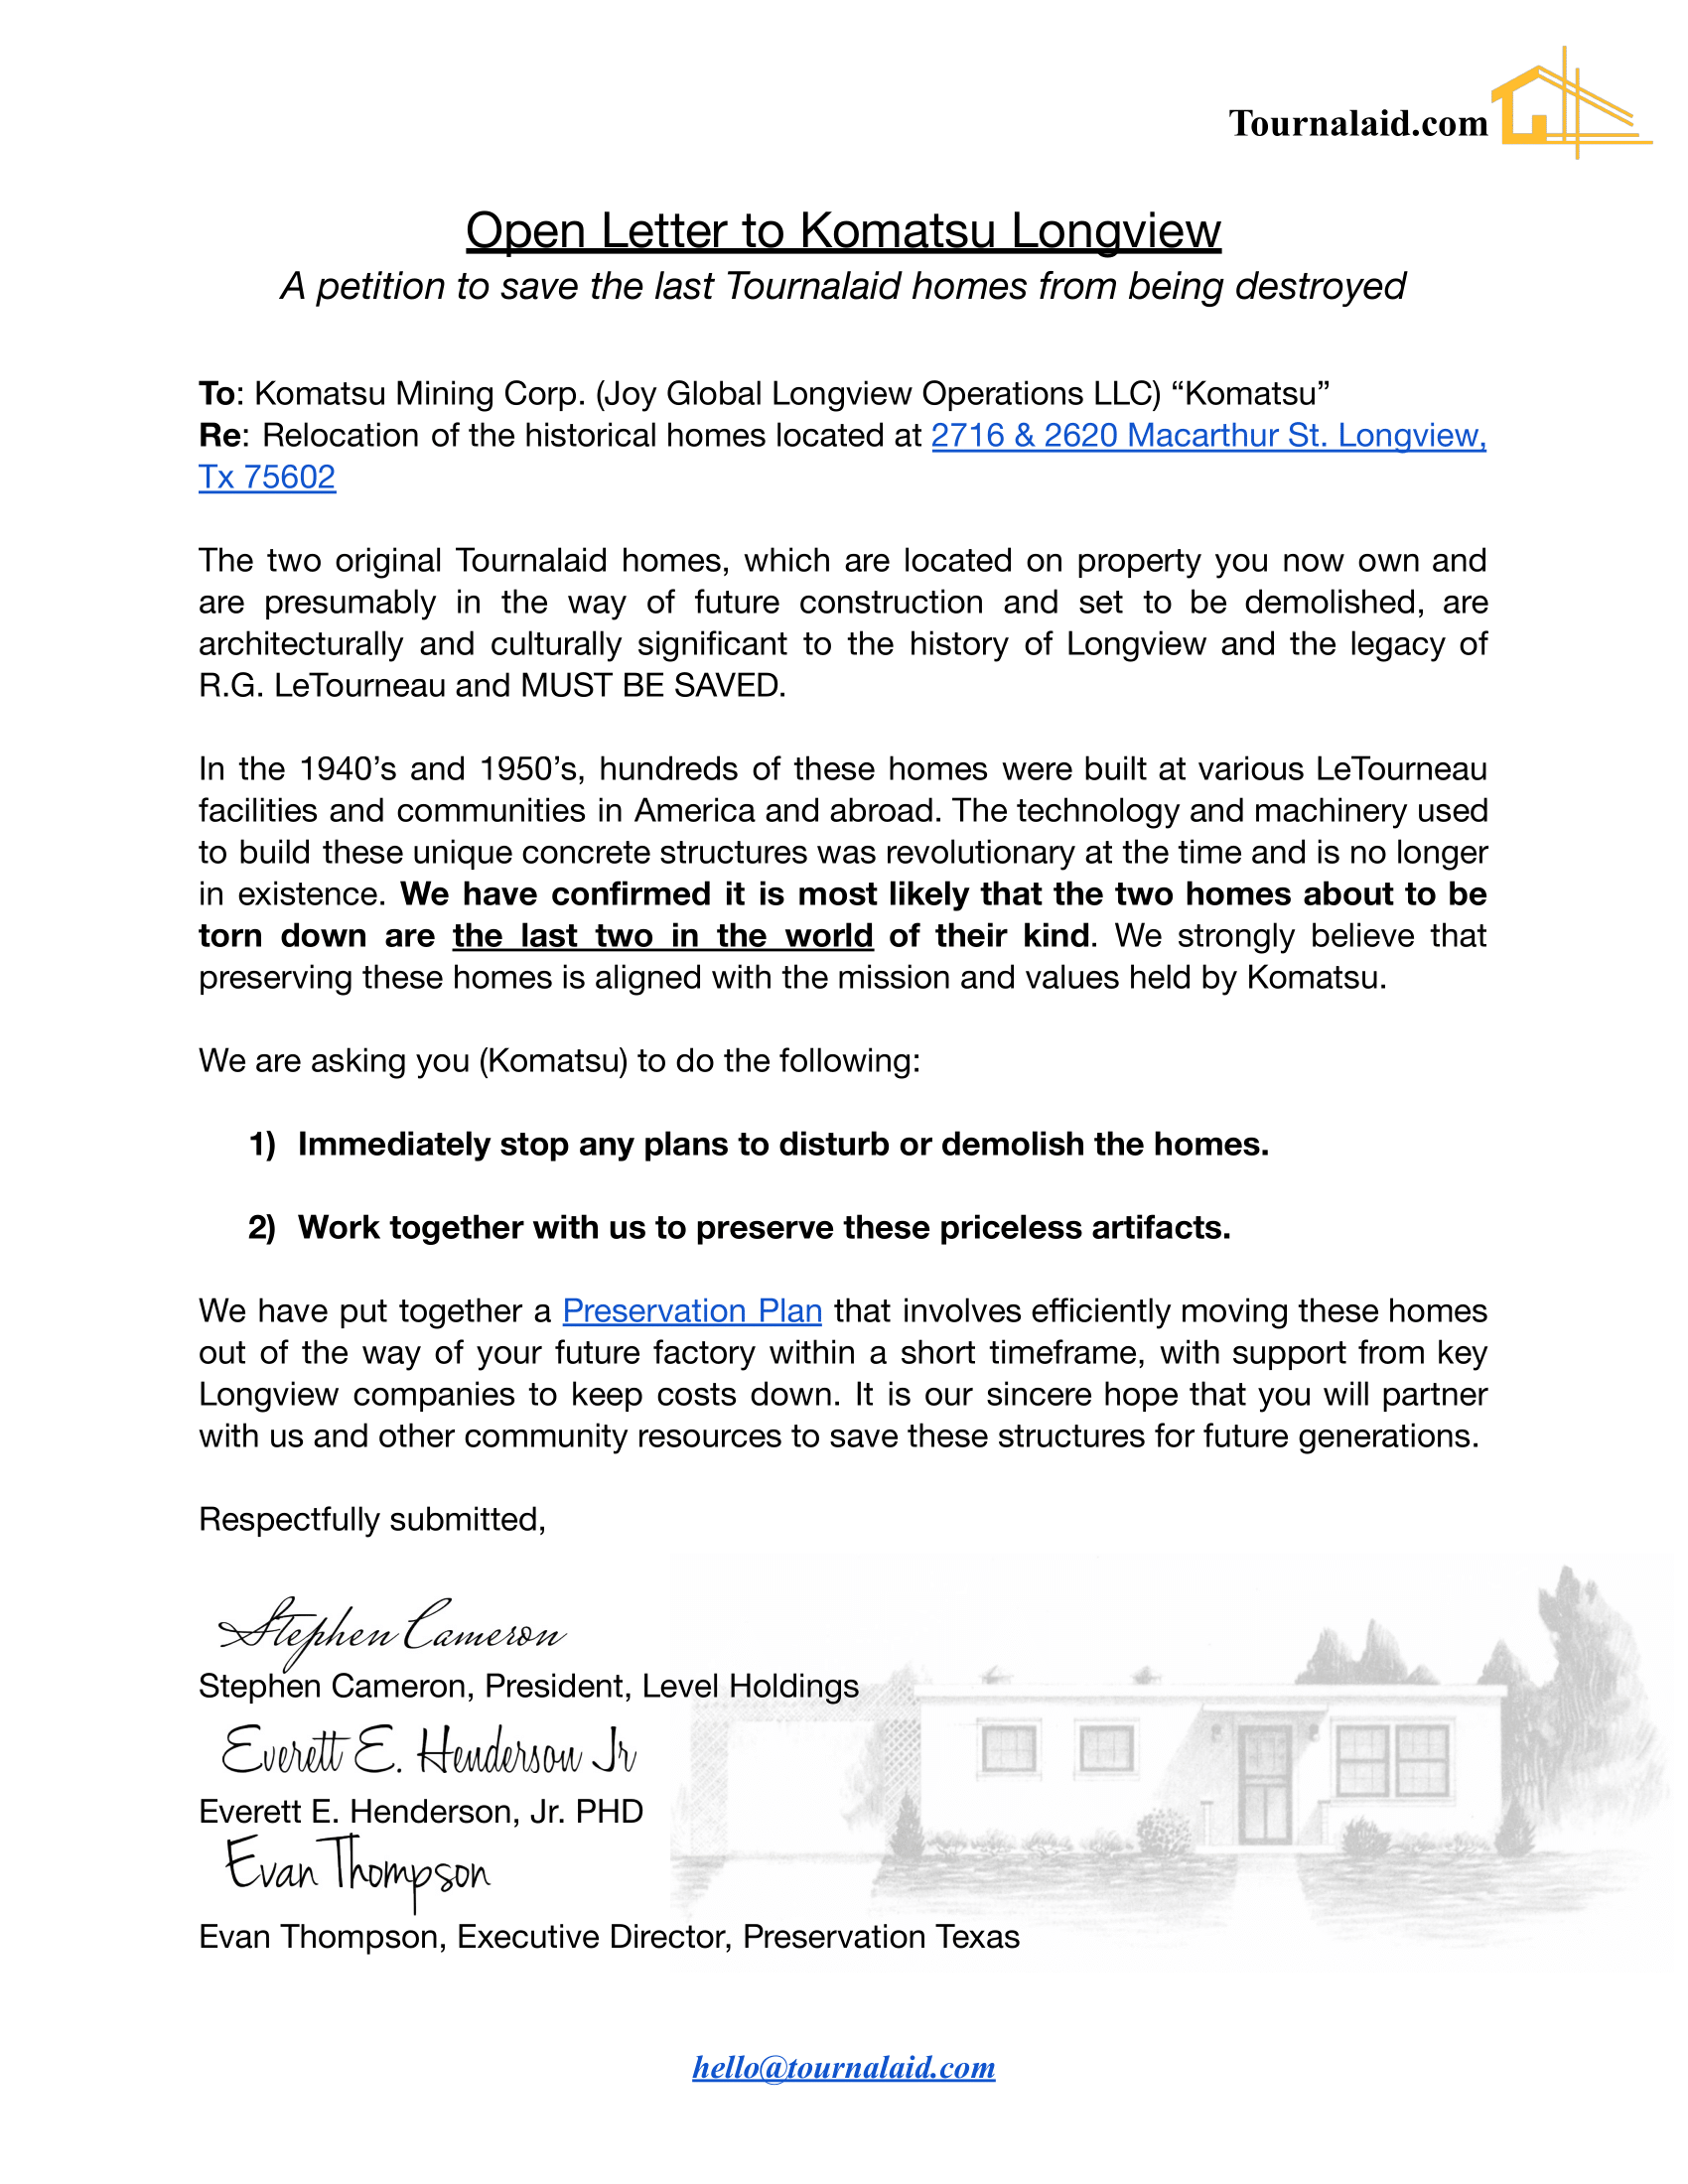 Petition to Save the Tournalaid Homes